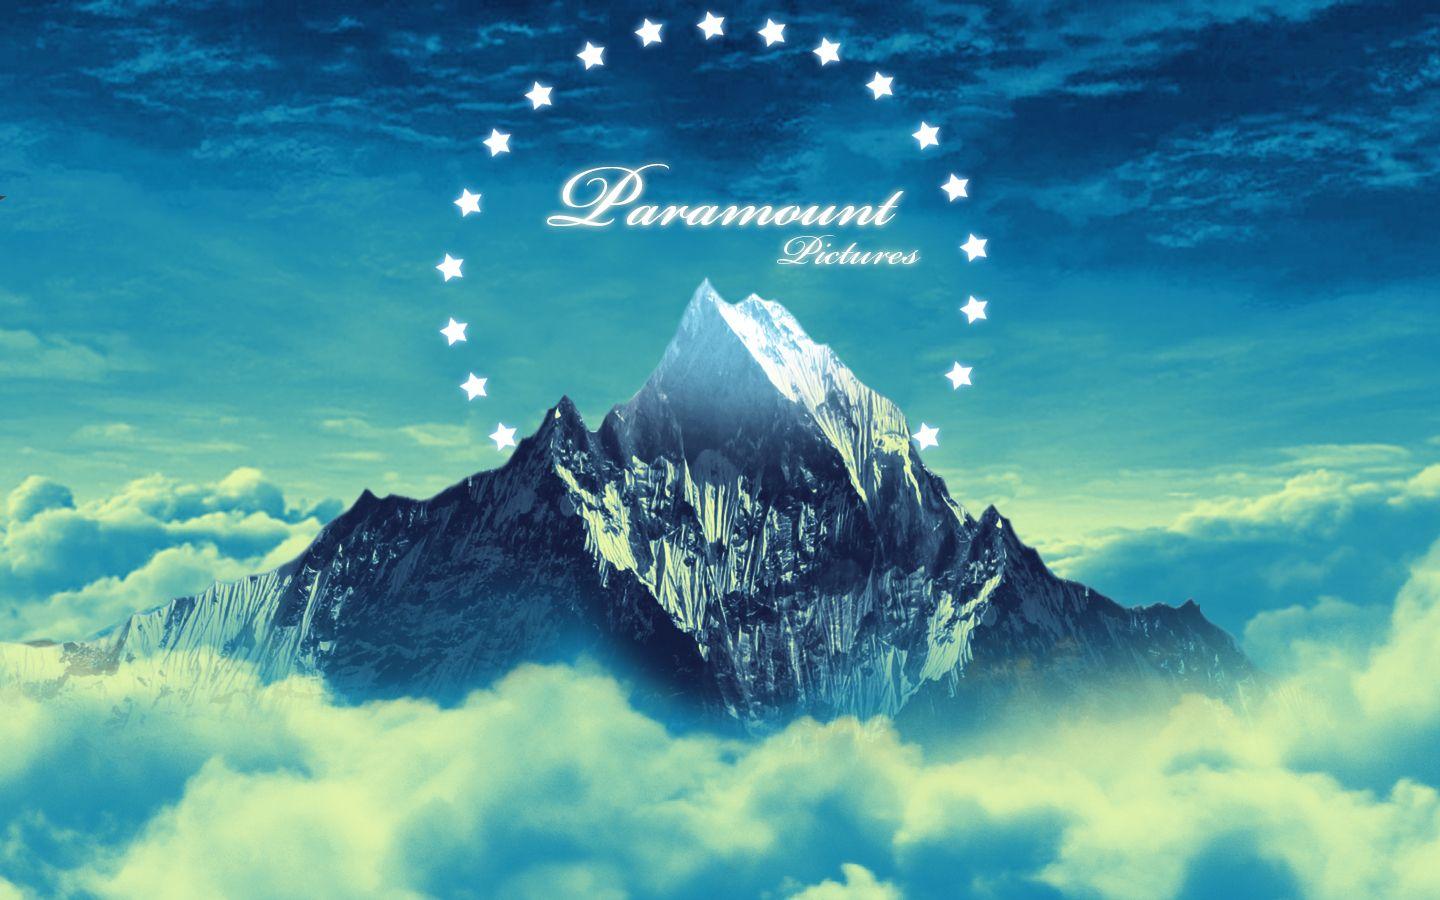 New Paramount Logo - Paramount Picture Corporation image New Paramount Picture Logo HD